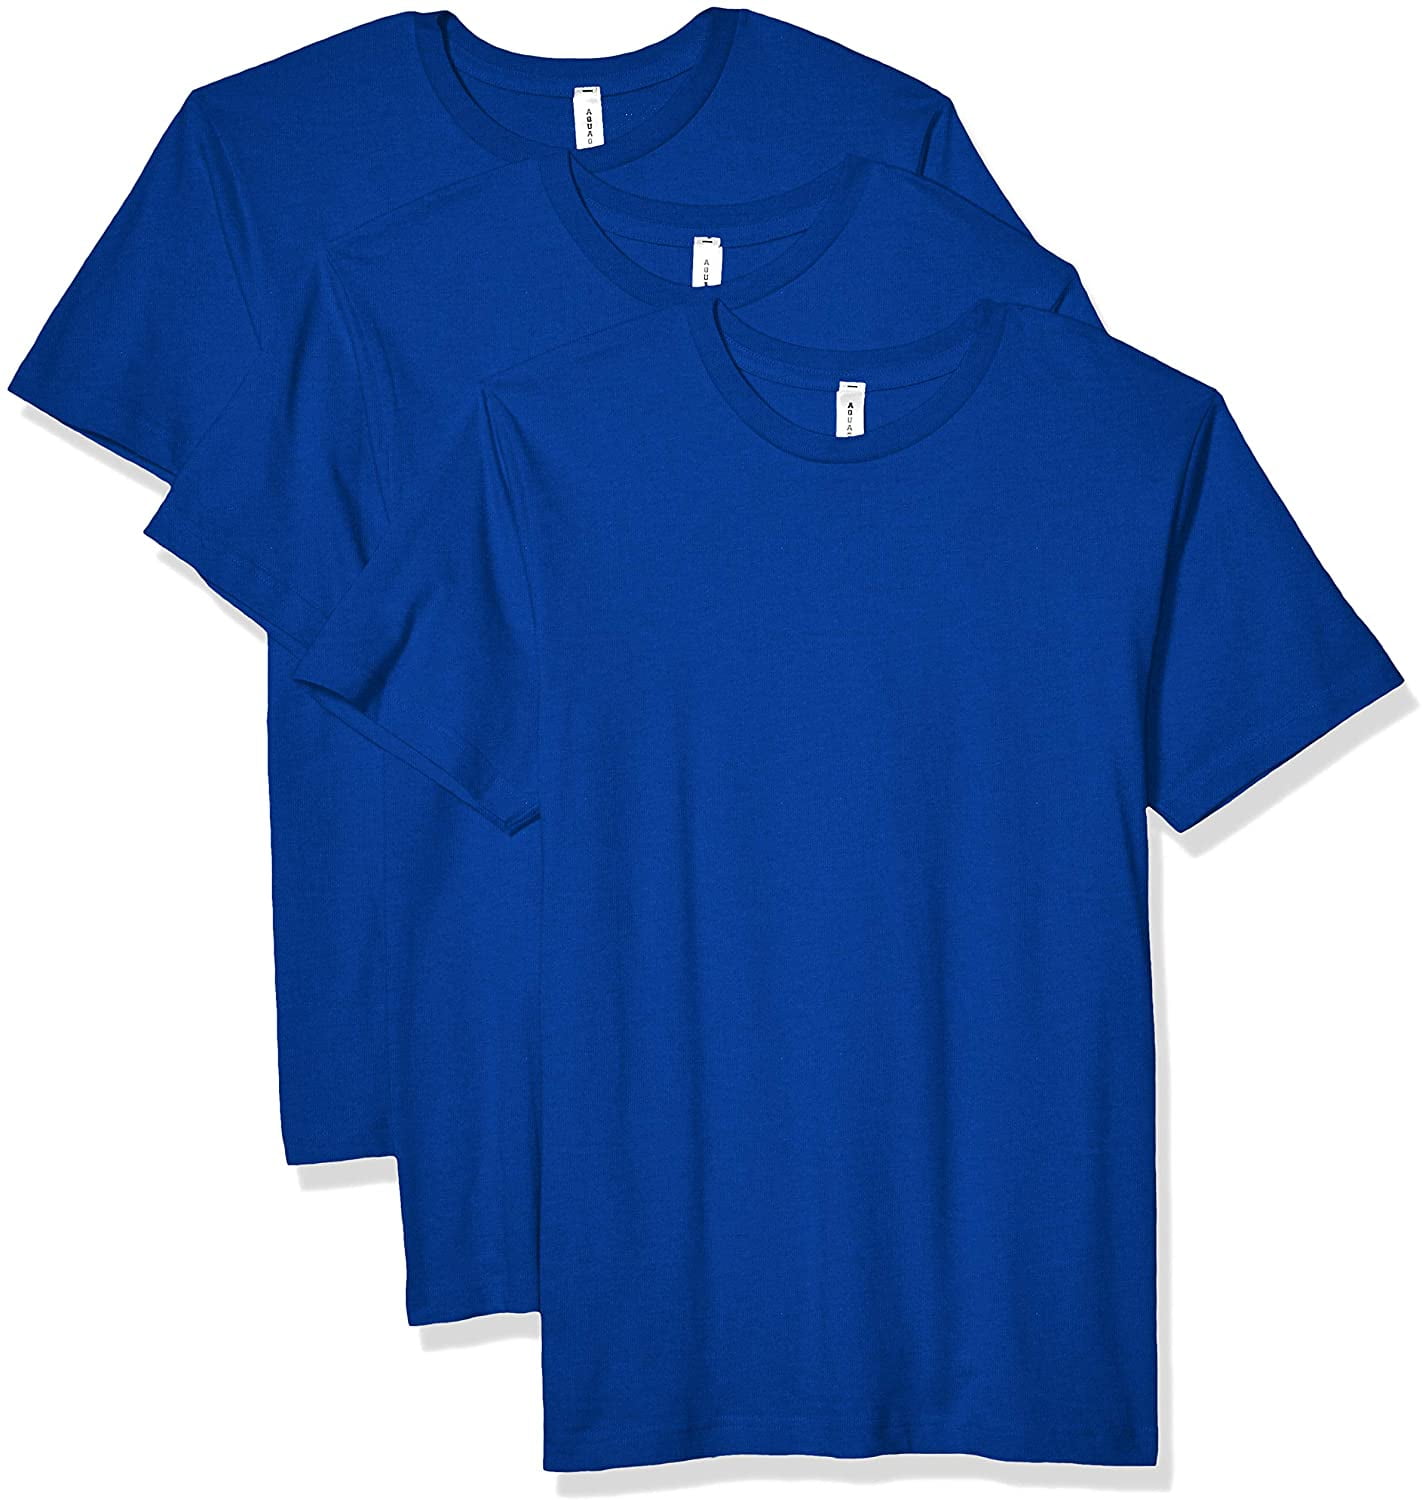 AquaGuard Mens Heavyweight Combed Ringspun Cotton T-Shirt-2 Pack